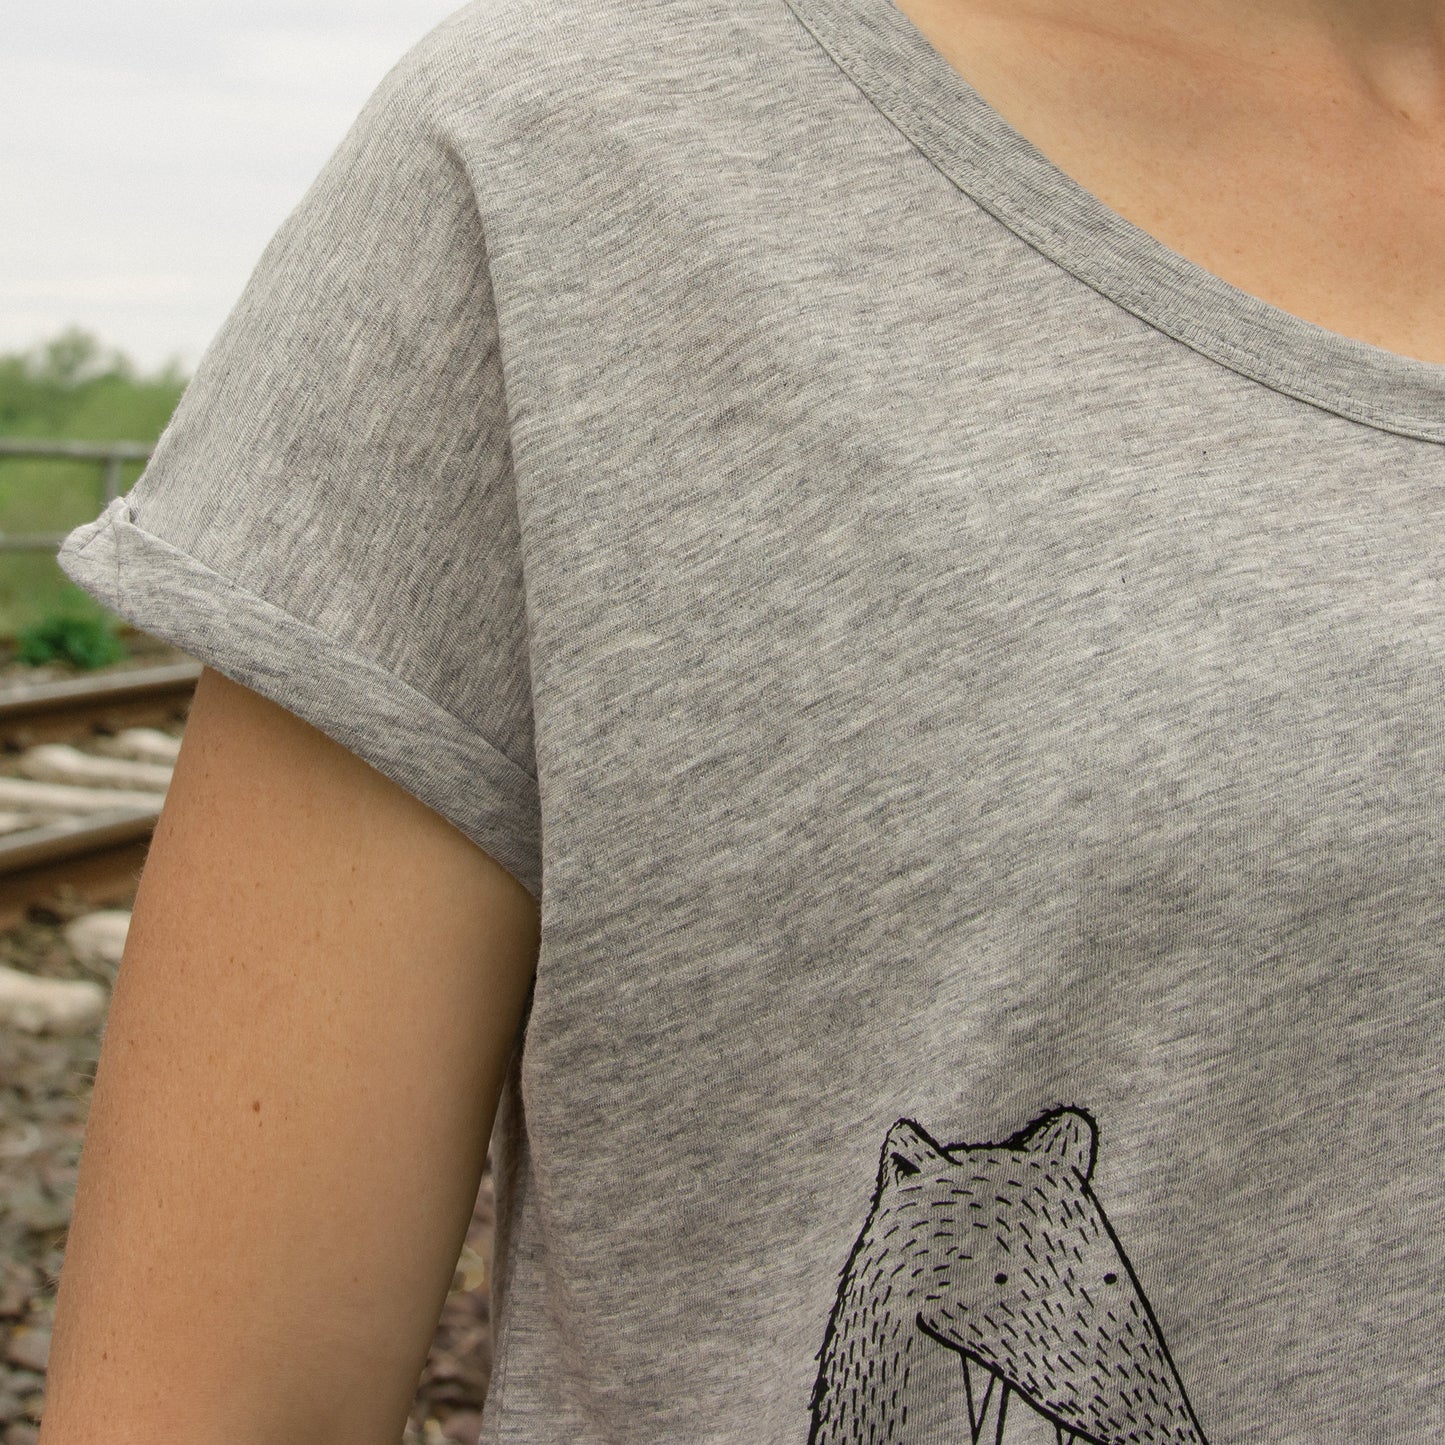 Reisewiesel T-Shirt in heather grey XS, S